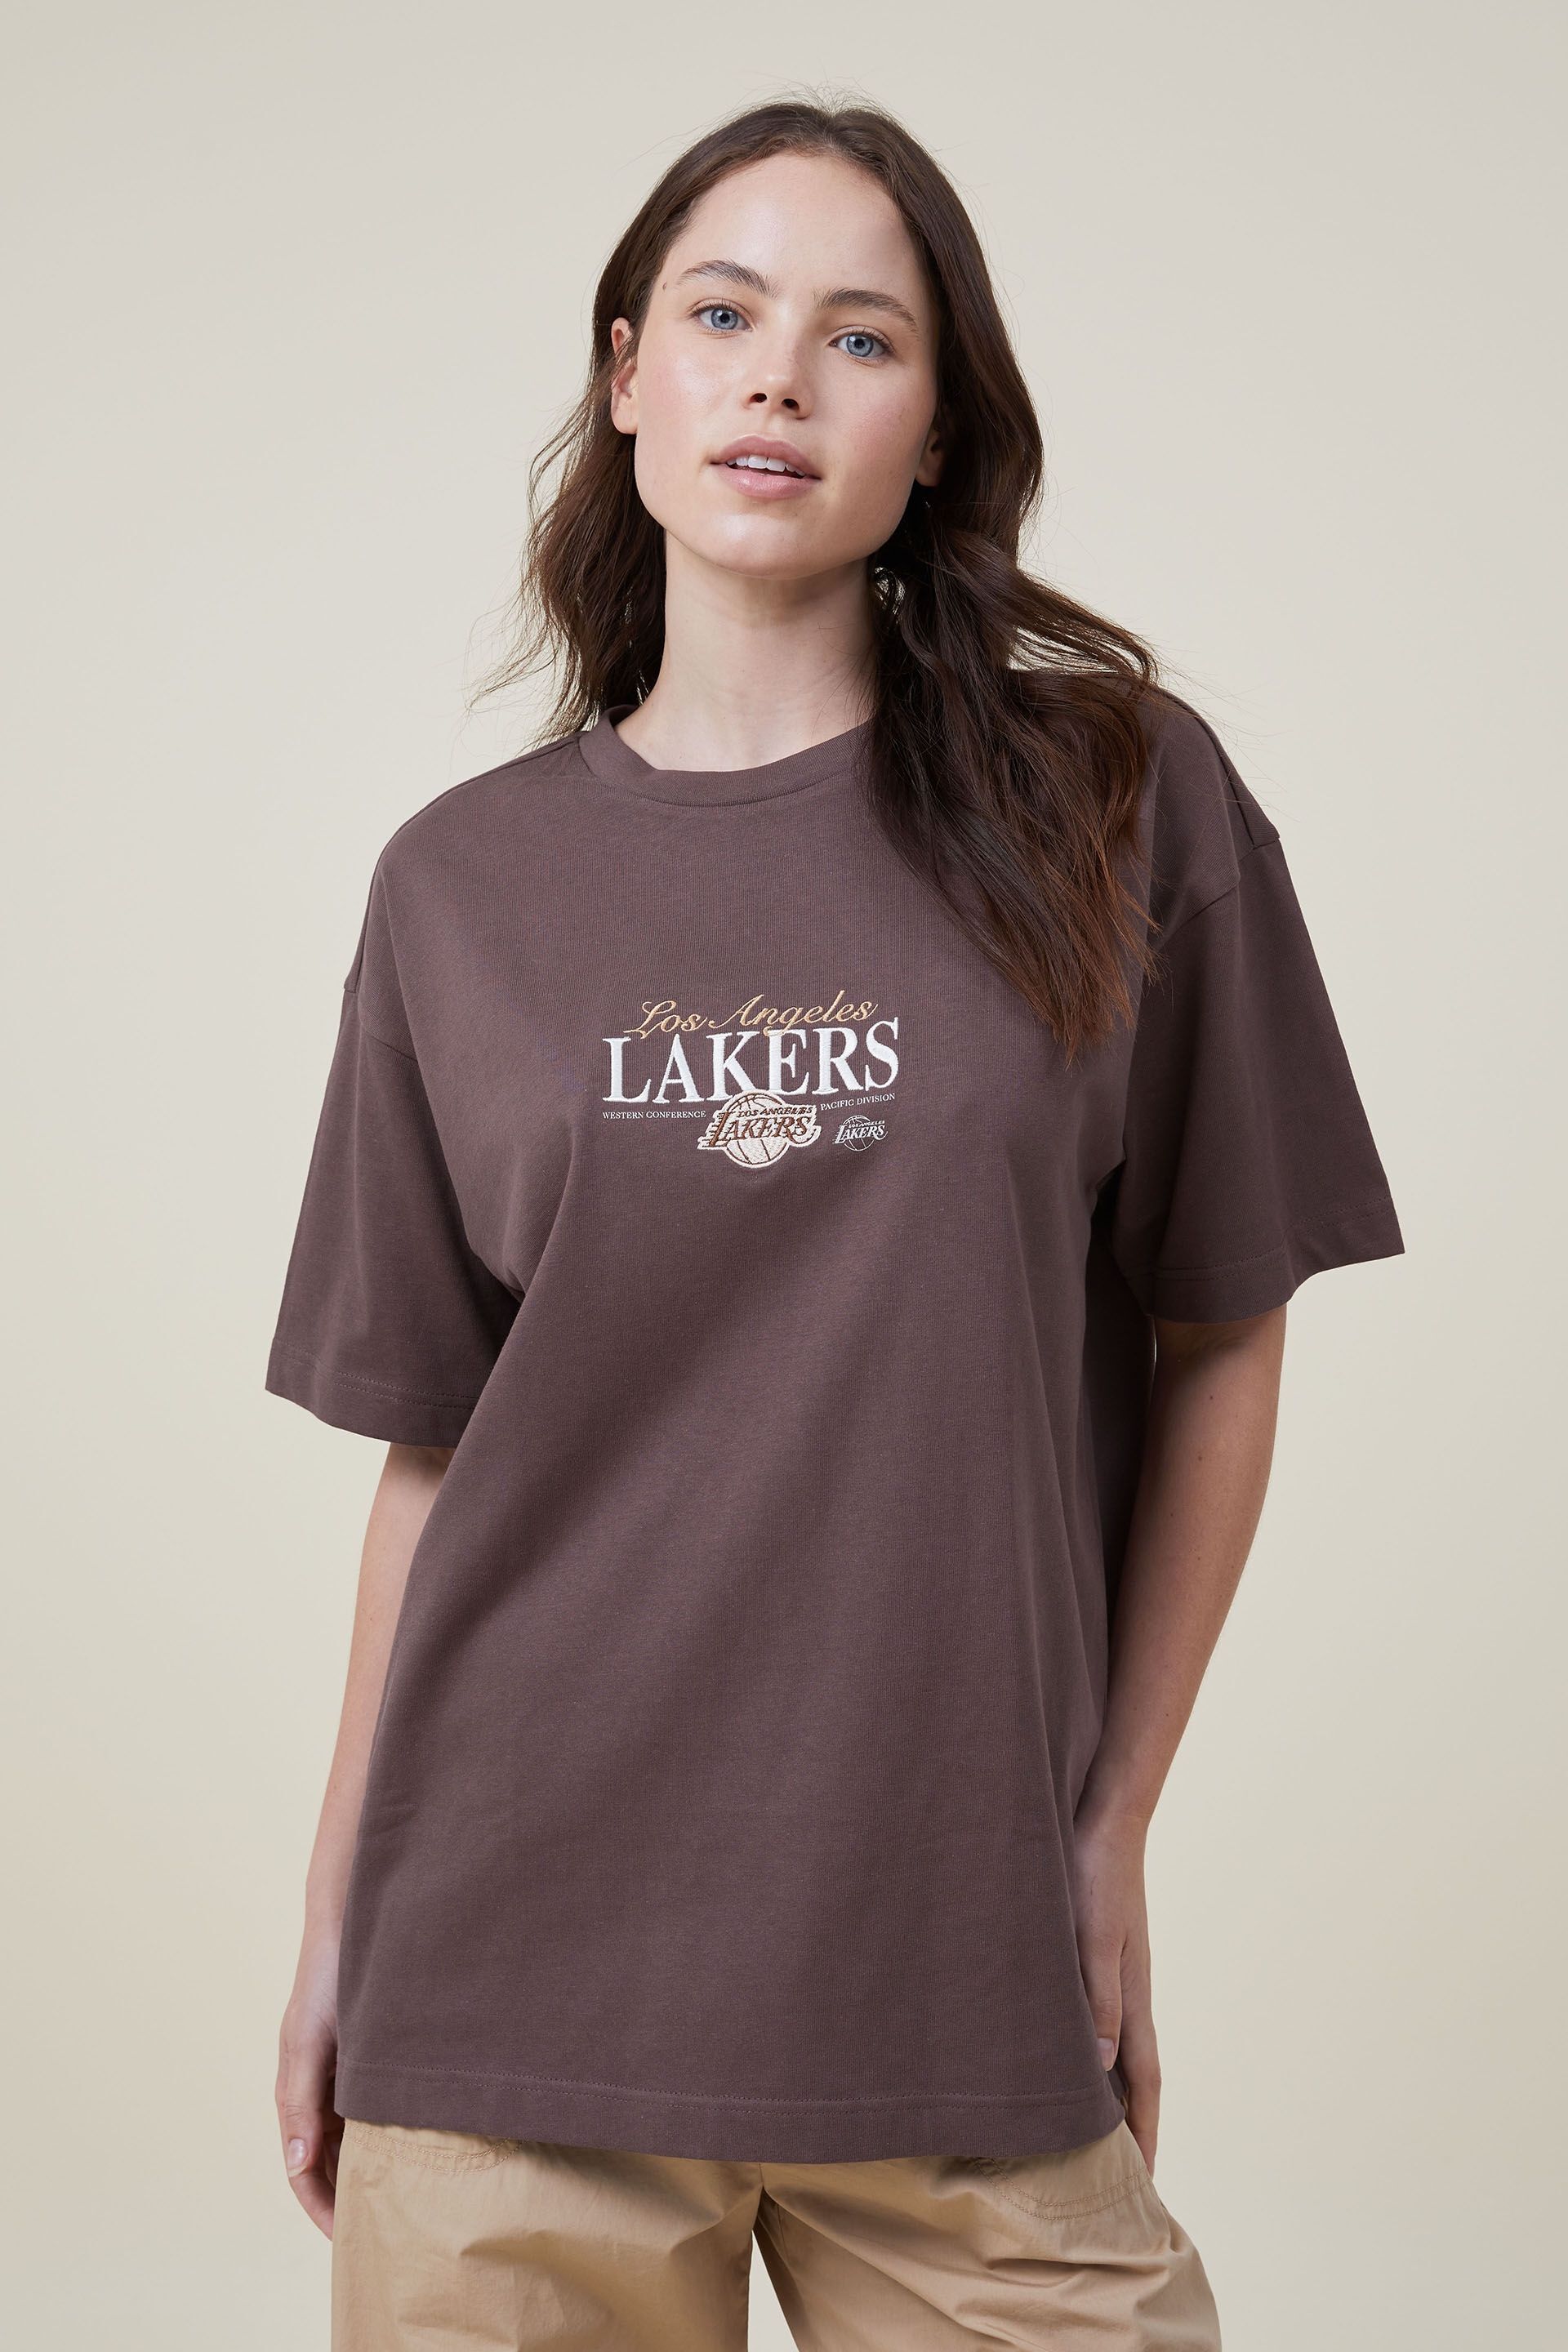 lakers shirt for women